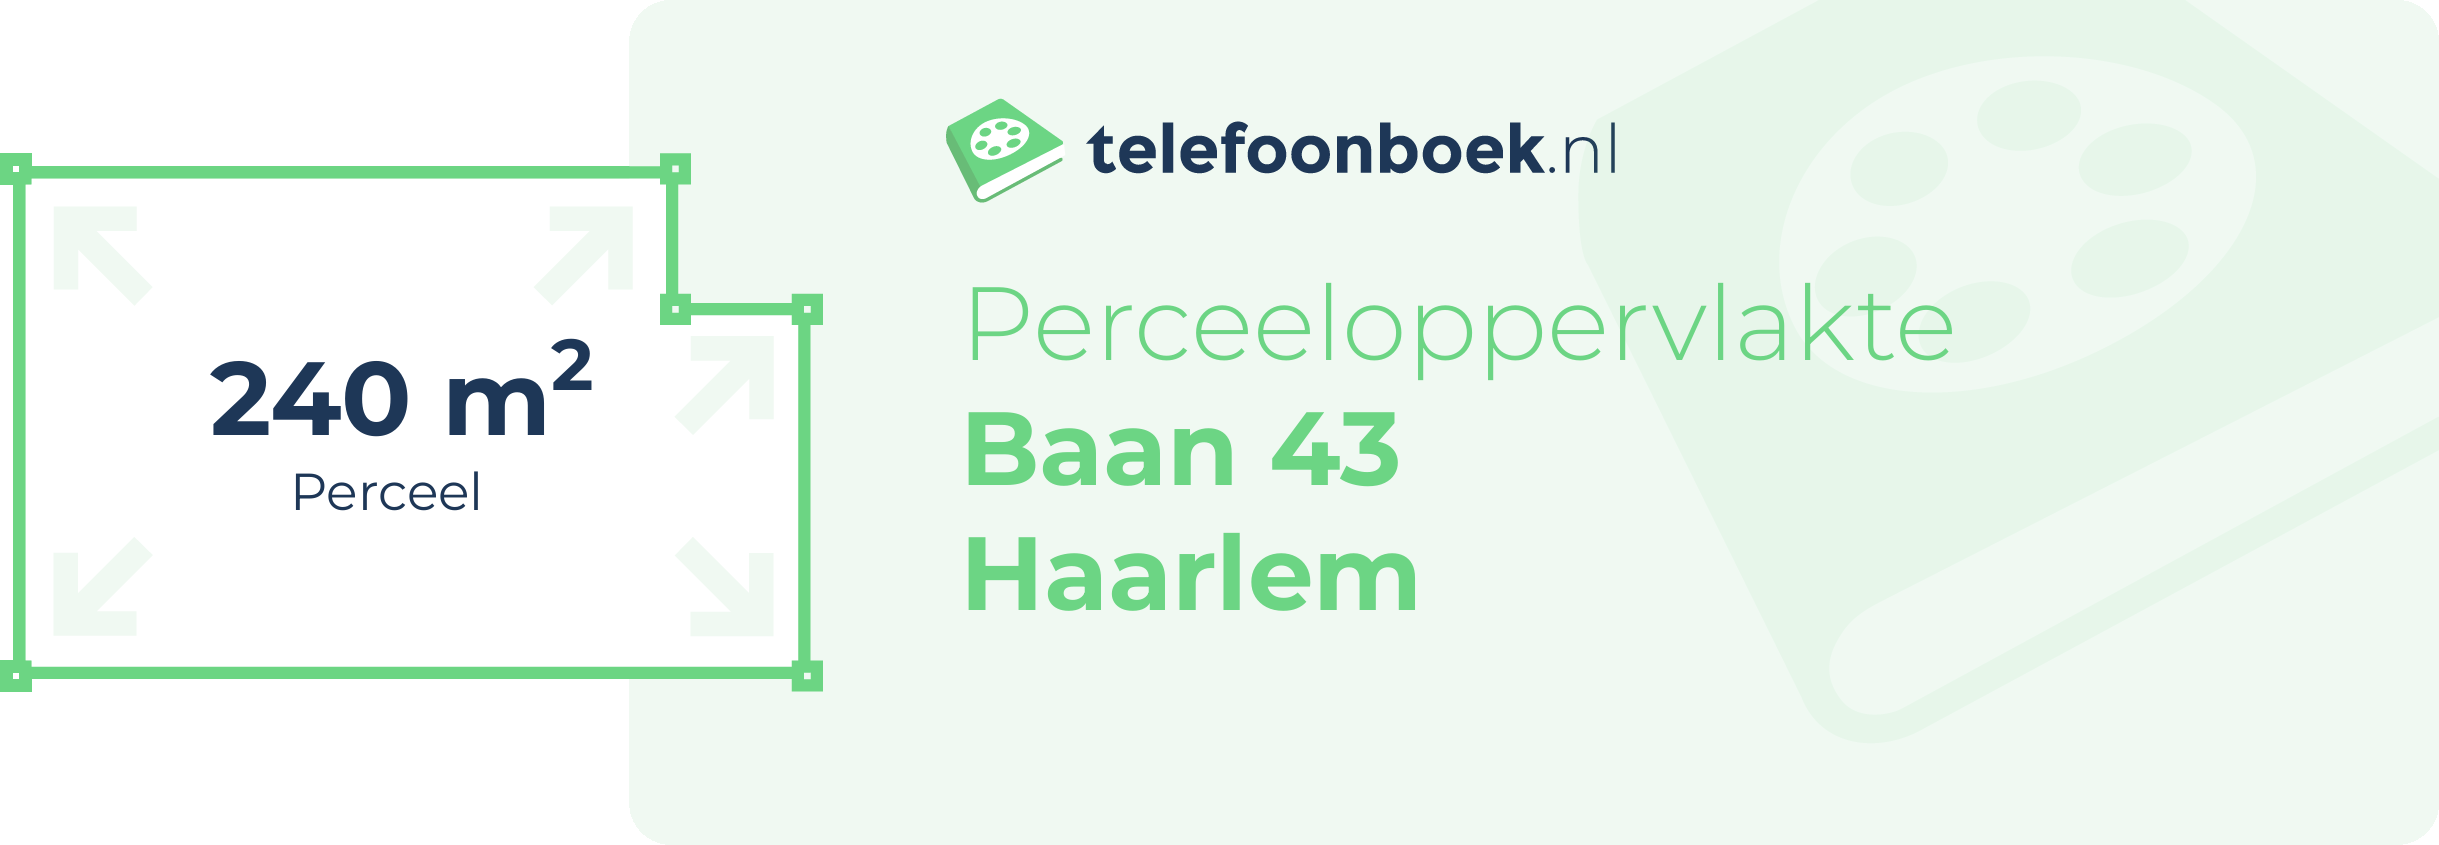 Perceeloppervlakte Baan 43 Haarlem